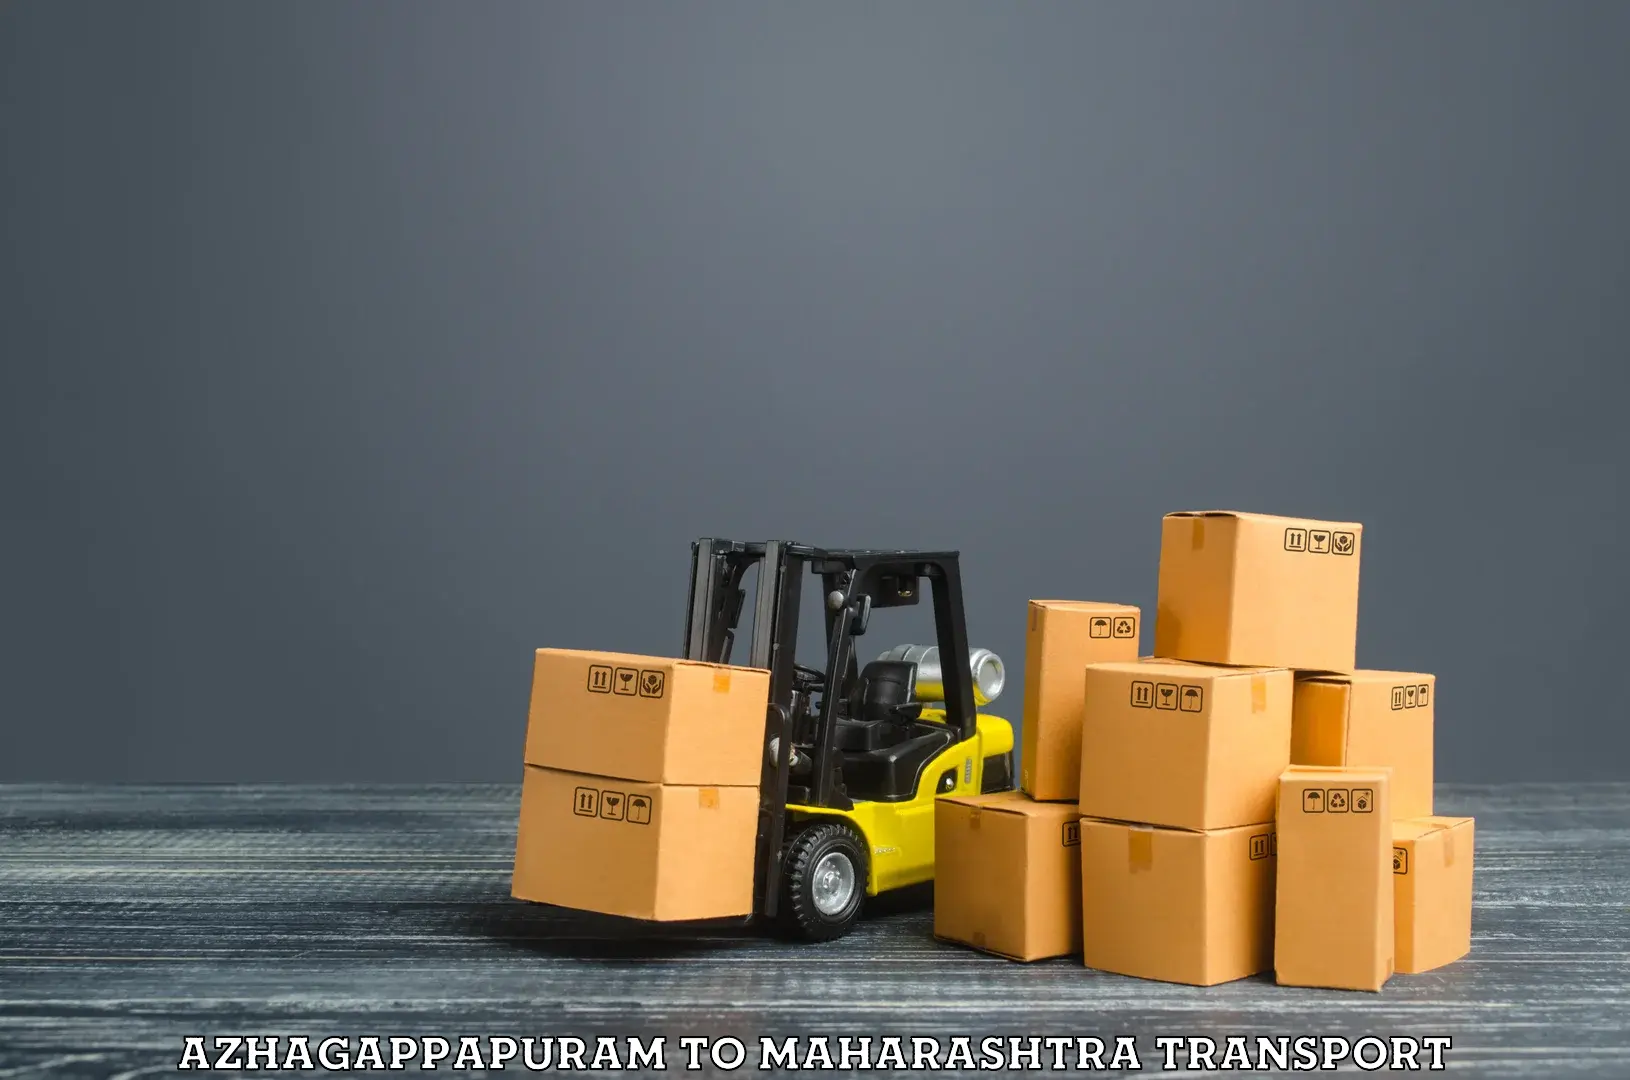 Truck transport companies in India Azhagappapuram to Nagpur